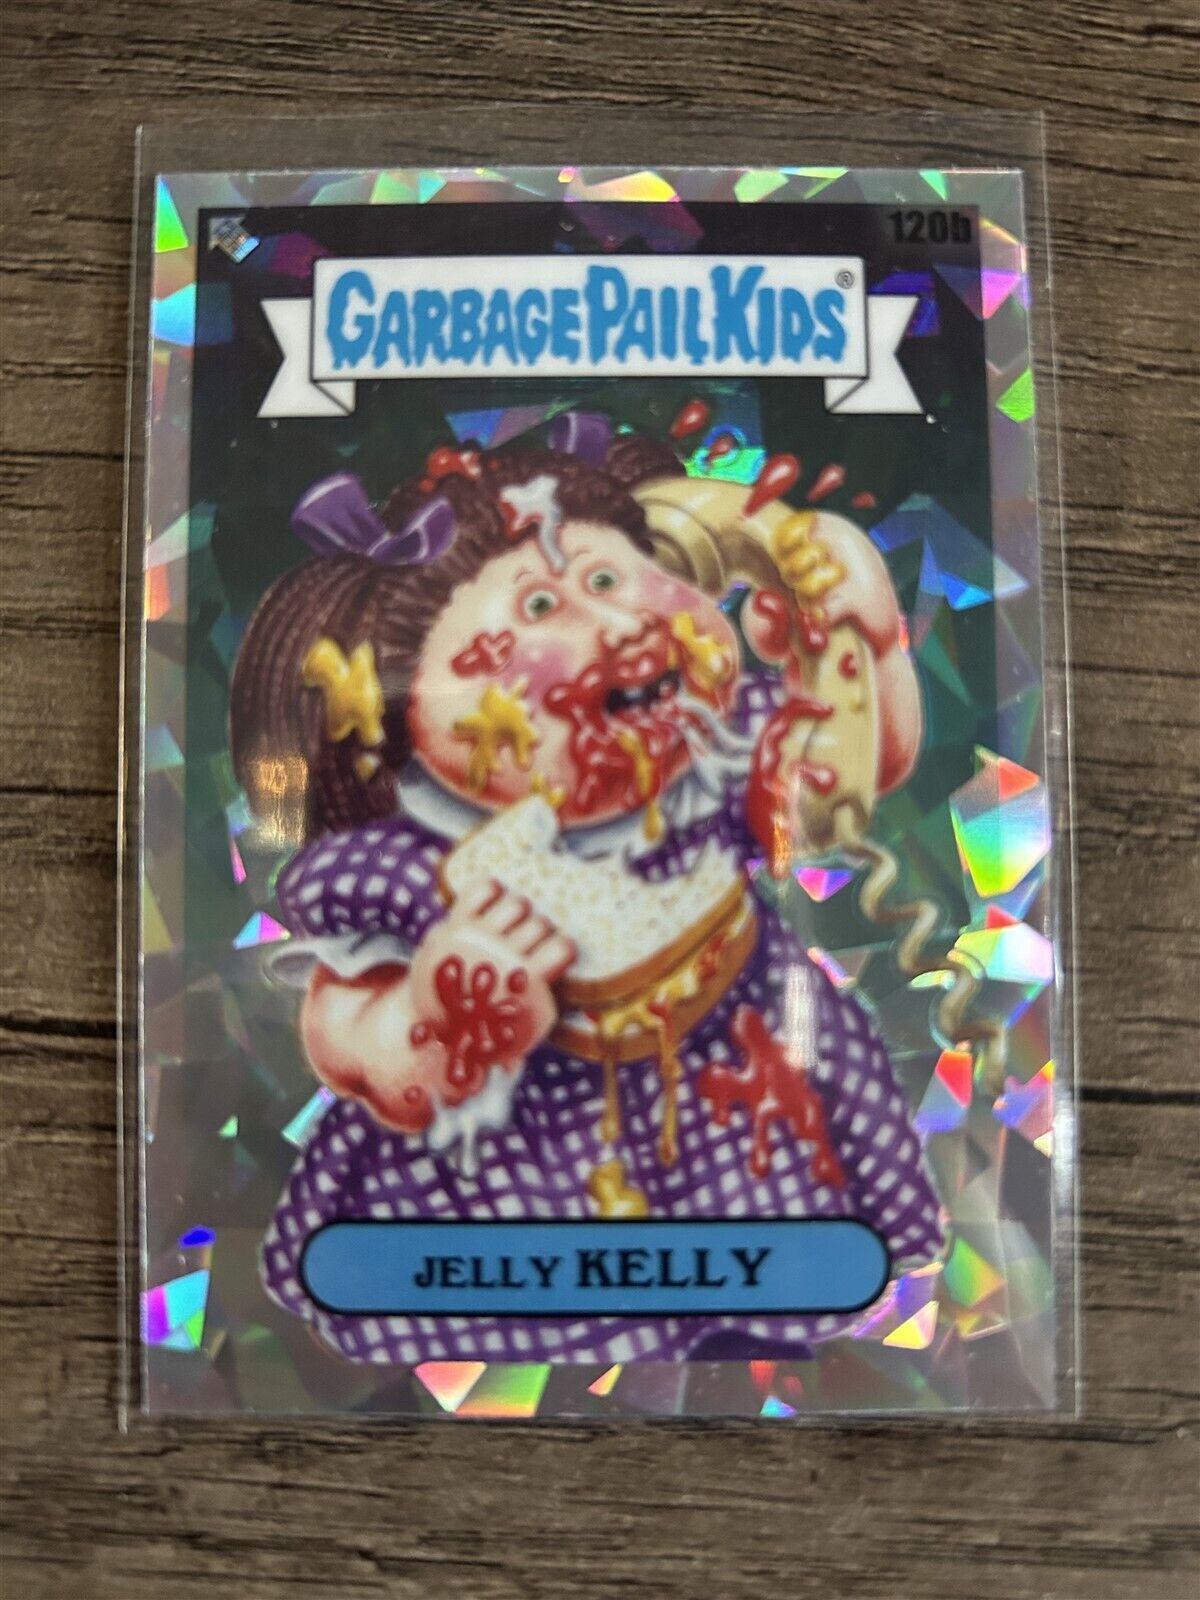 2020 Topps Chrome Garbage Pail Kids Jelly Kelly 120b Atomic Refractor